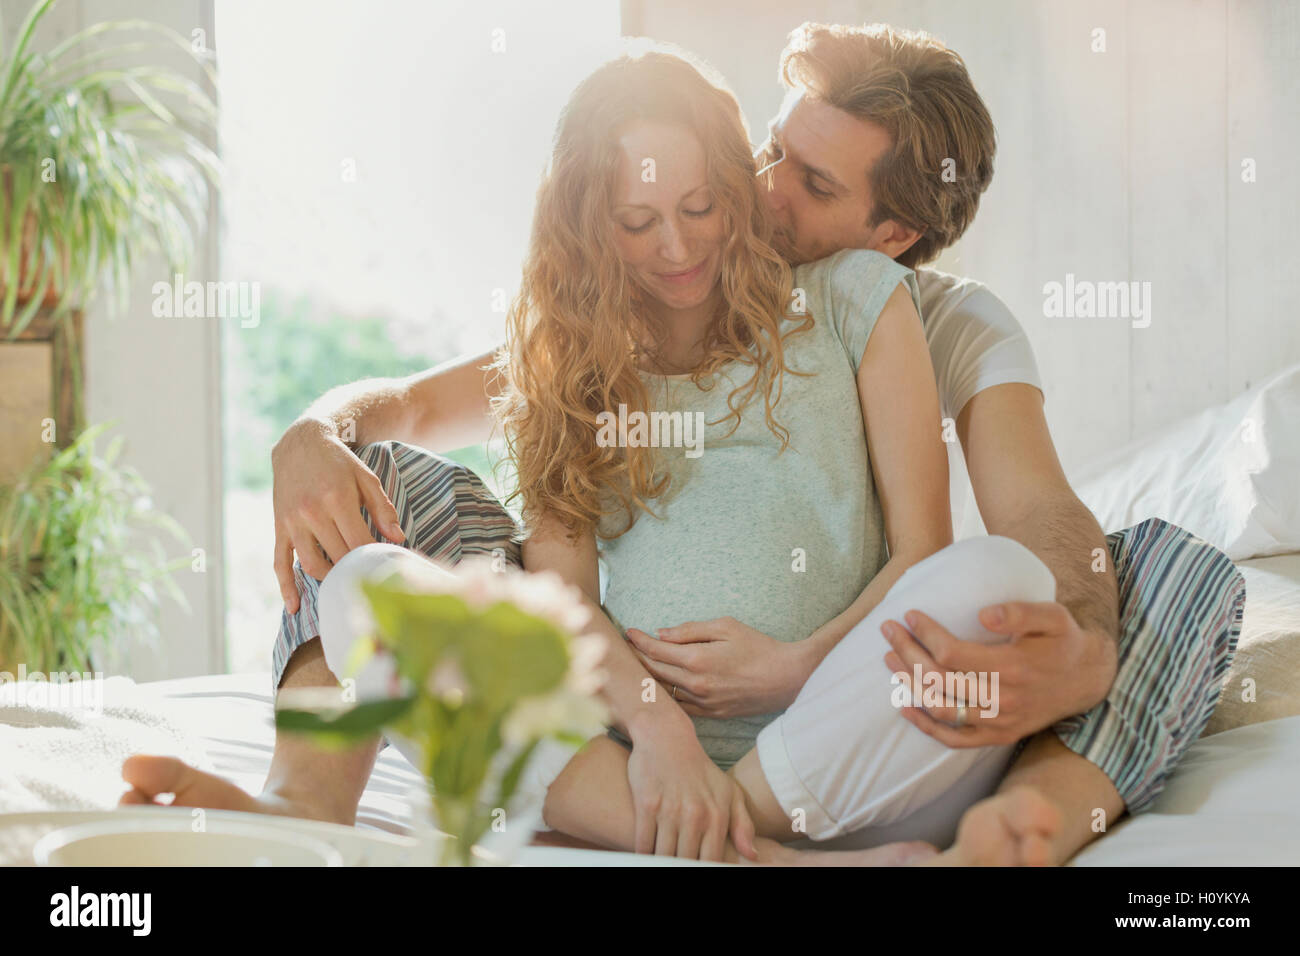 Schwangere paar küssen Pyjama ins Bett Schlafzimmer Stockfoto